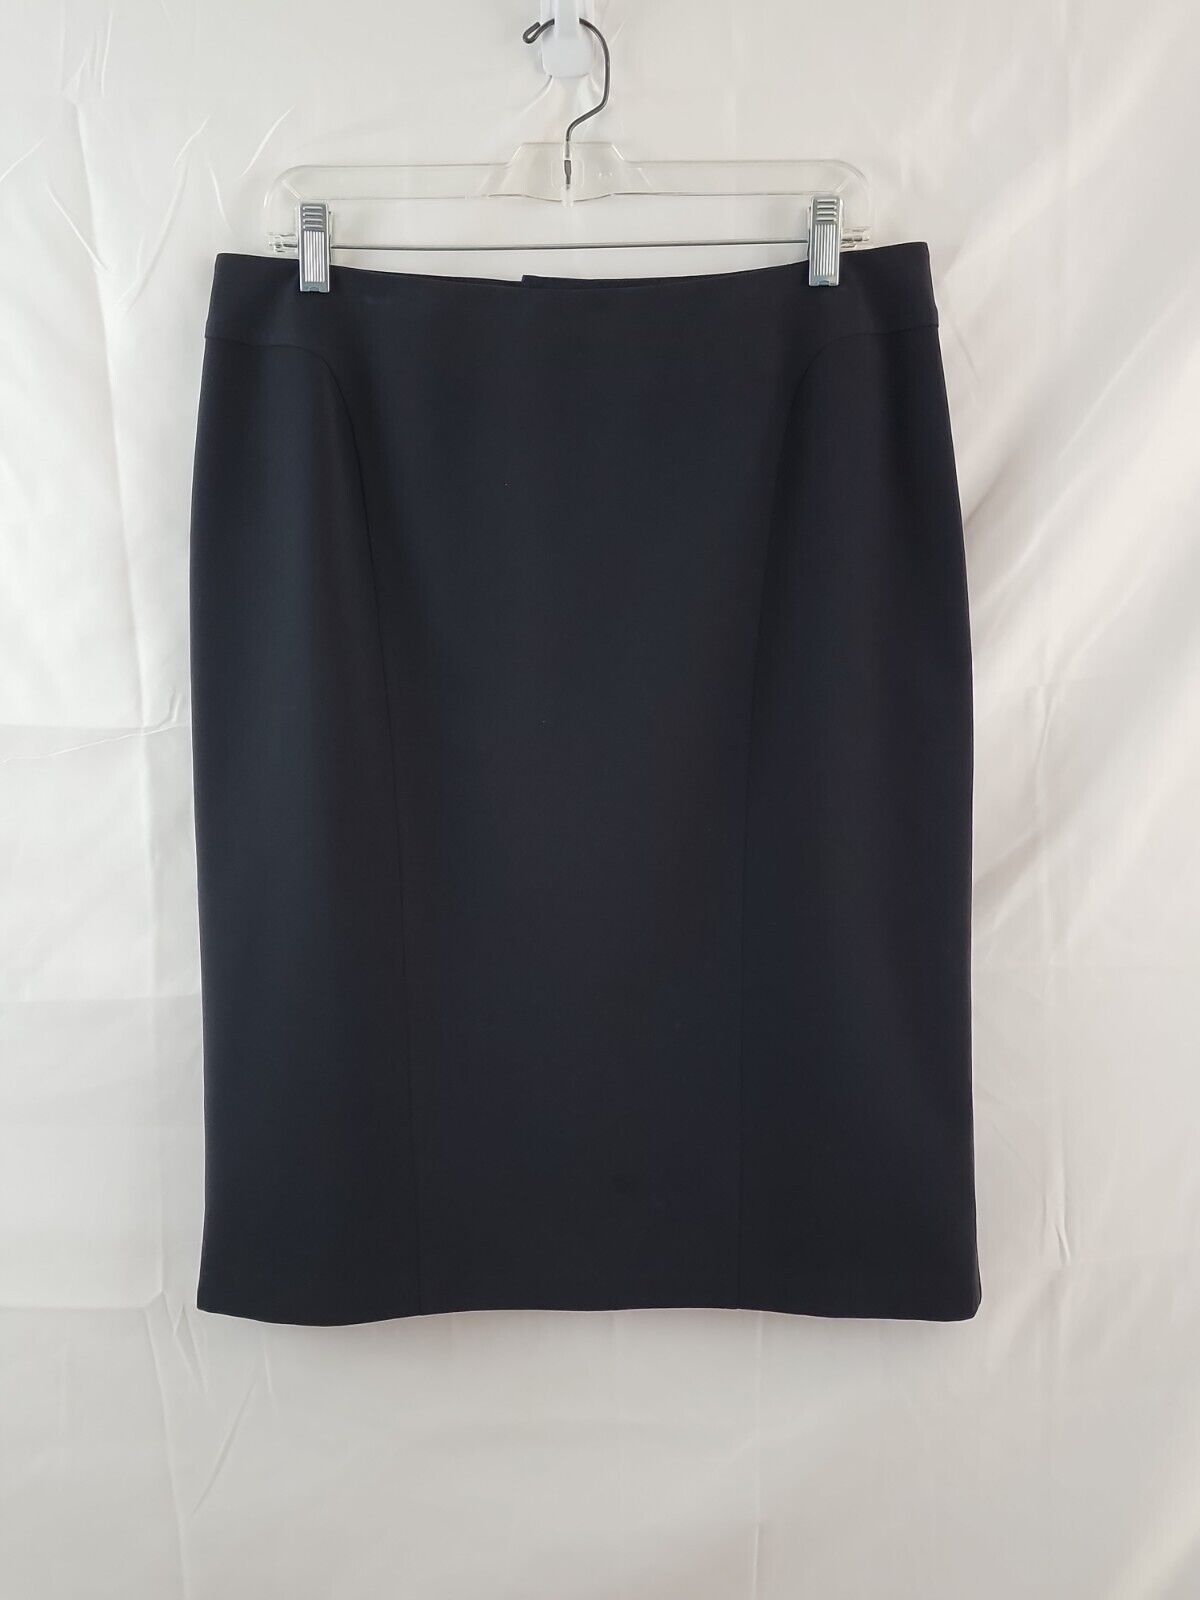 Giorgio Armani Womens Black Midi  A-Line Lined Pencil Skirt Size 44 US 4-6 Used